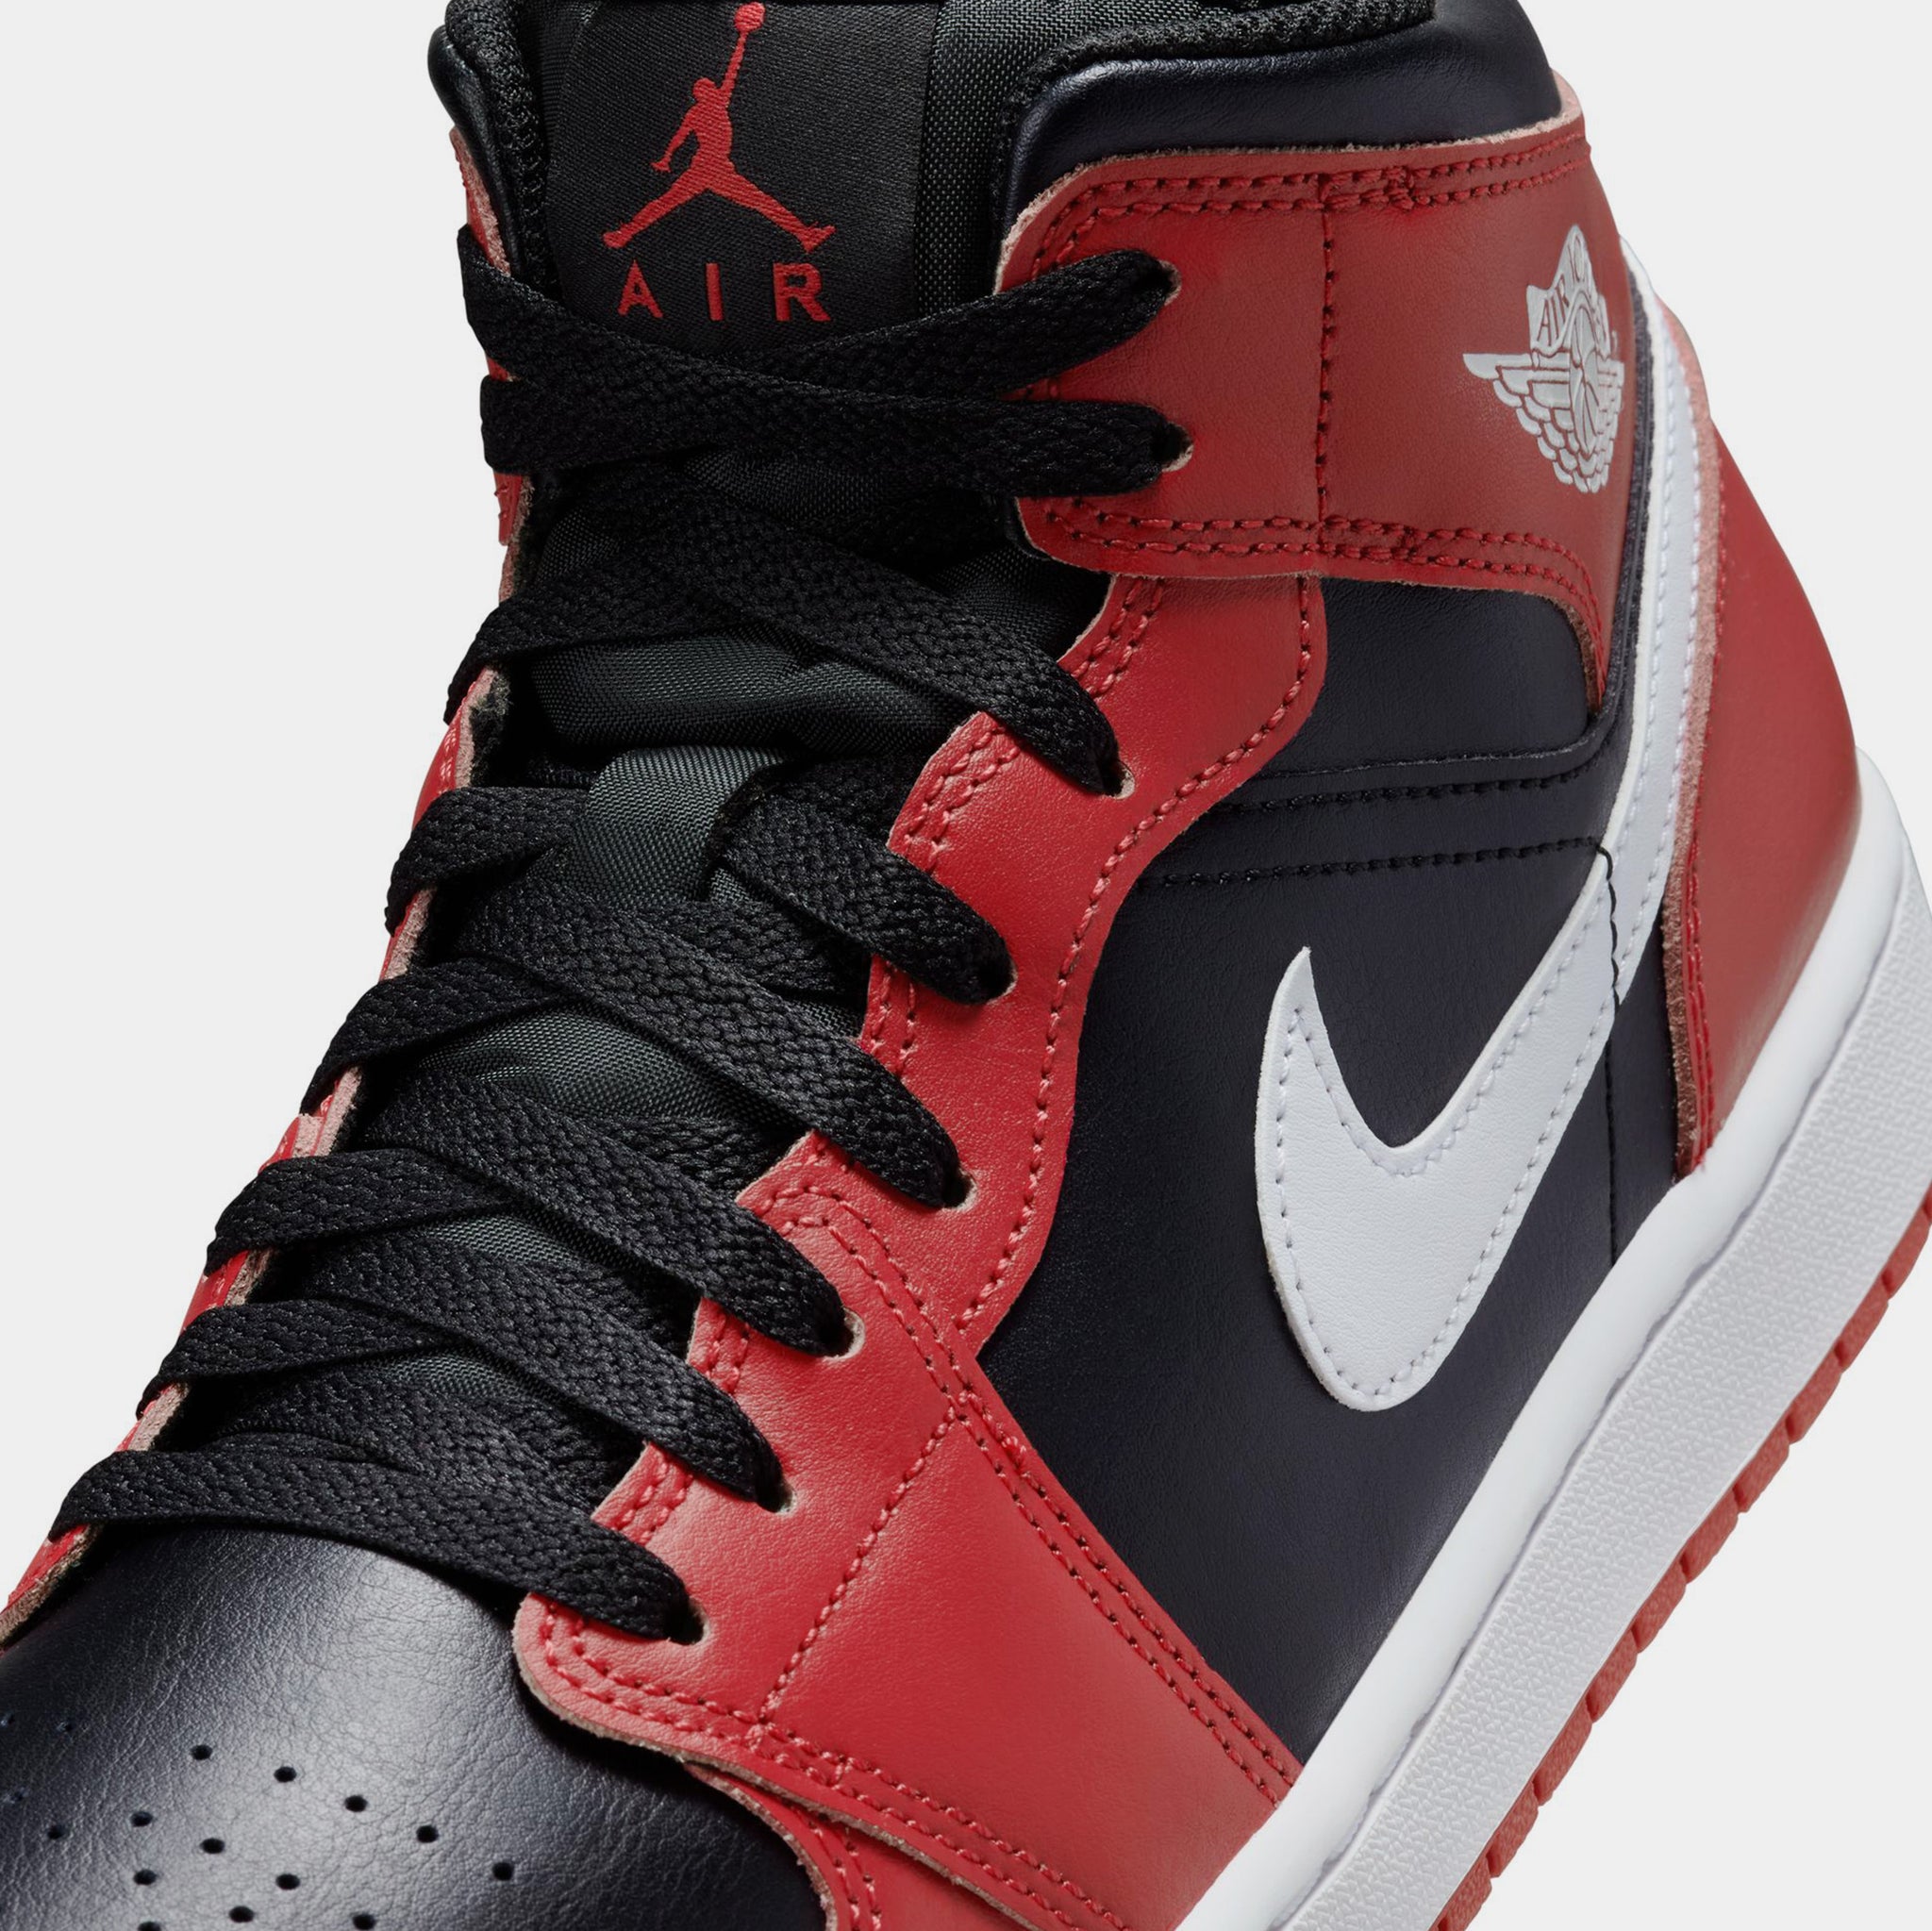 Air Jordan 1 Mid Black Gym Red Mens Basketball Shoes (Black/Gym Red/ White)